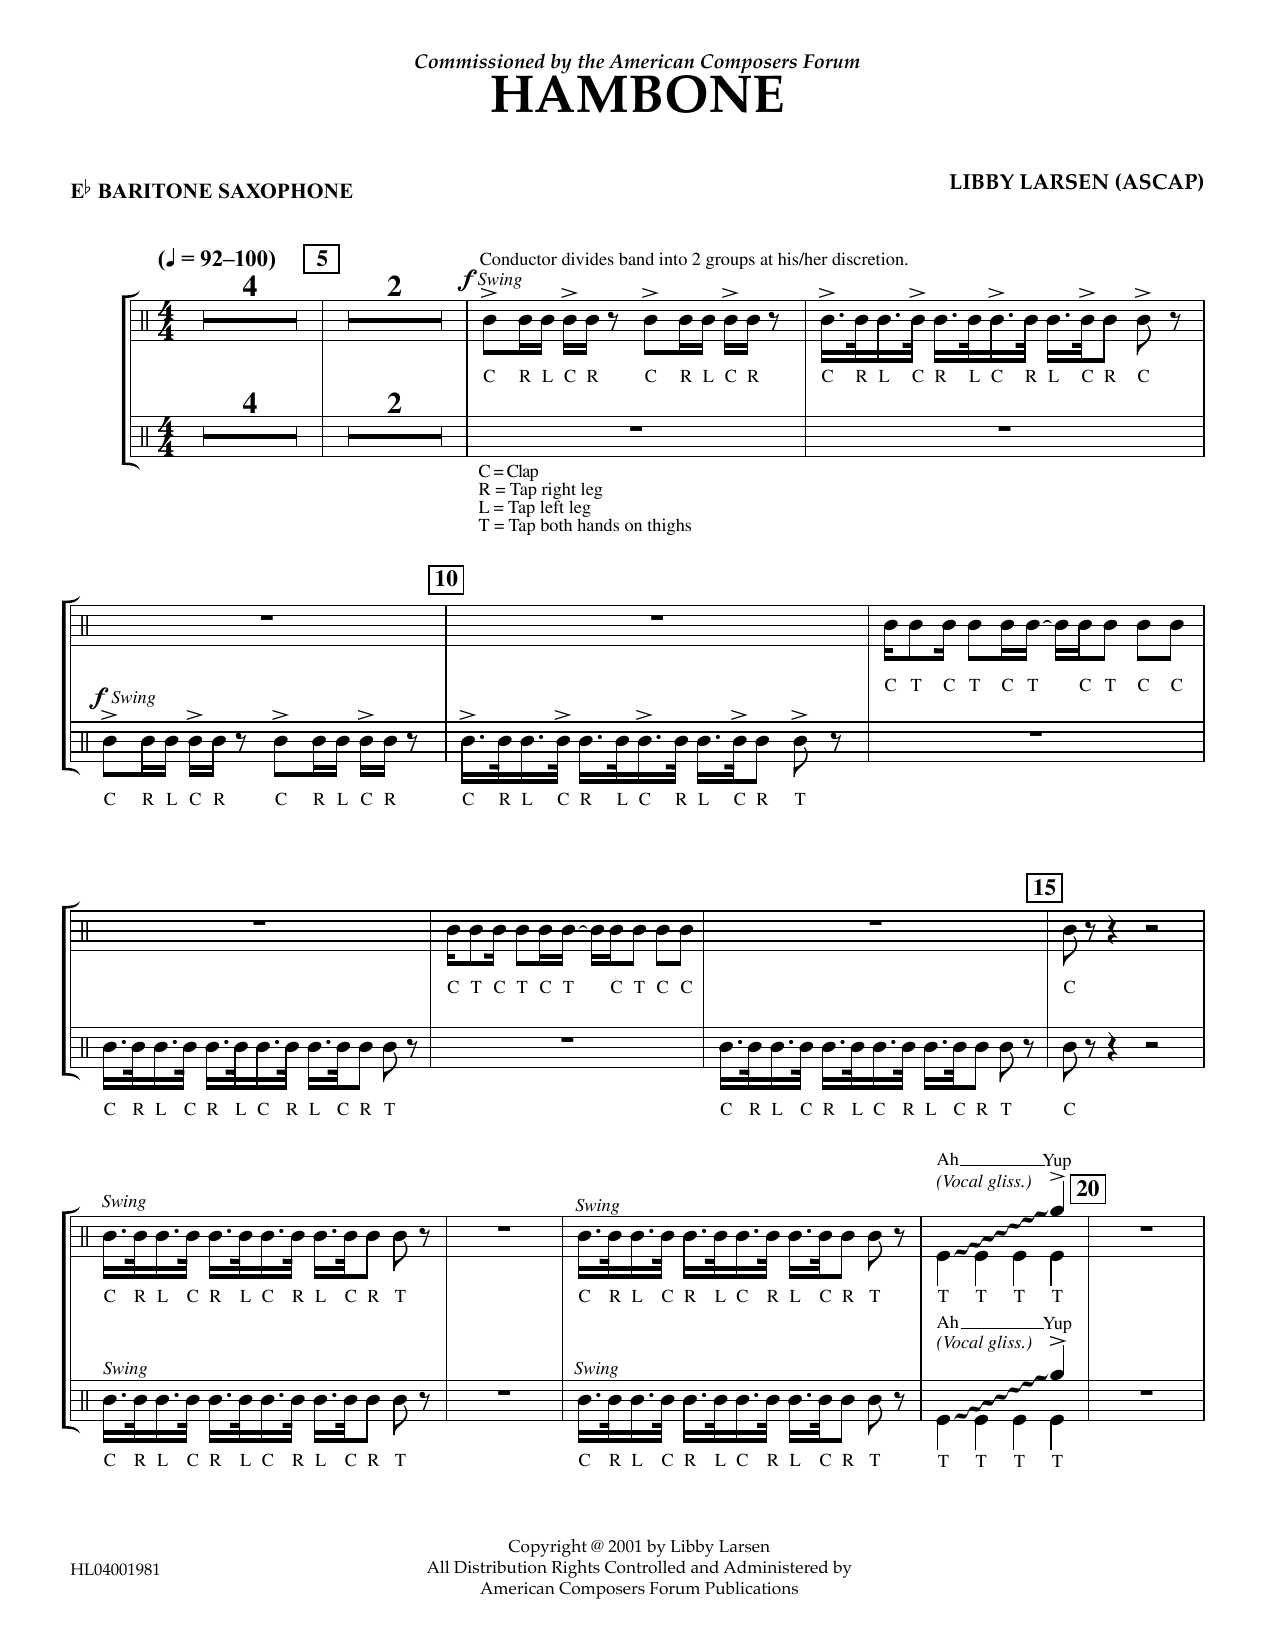 Libby Larsen Hambone - Eb Baritone Saxophone Sheet Music Notes & Chords for Concert Band - Download or Print PDF